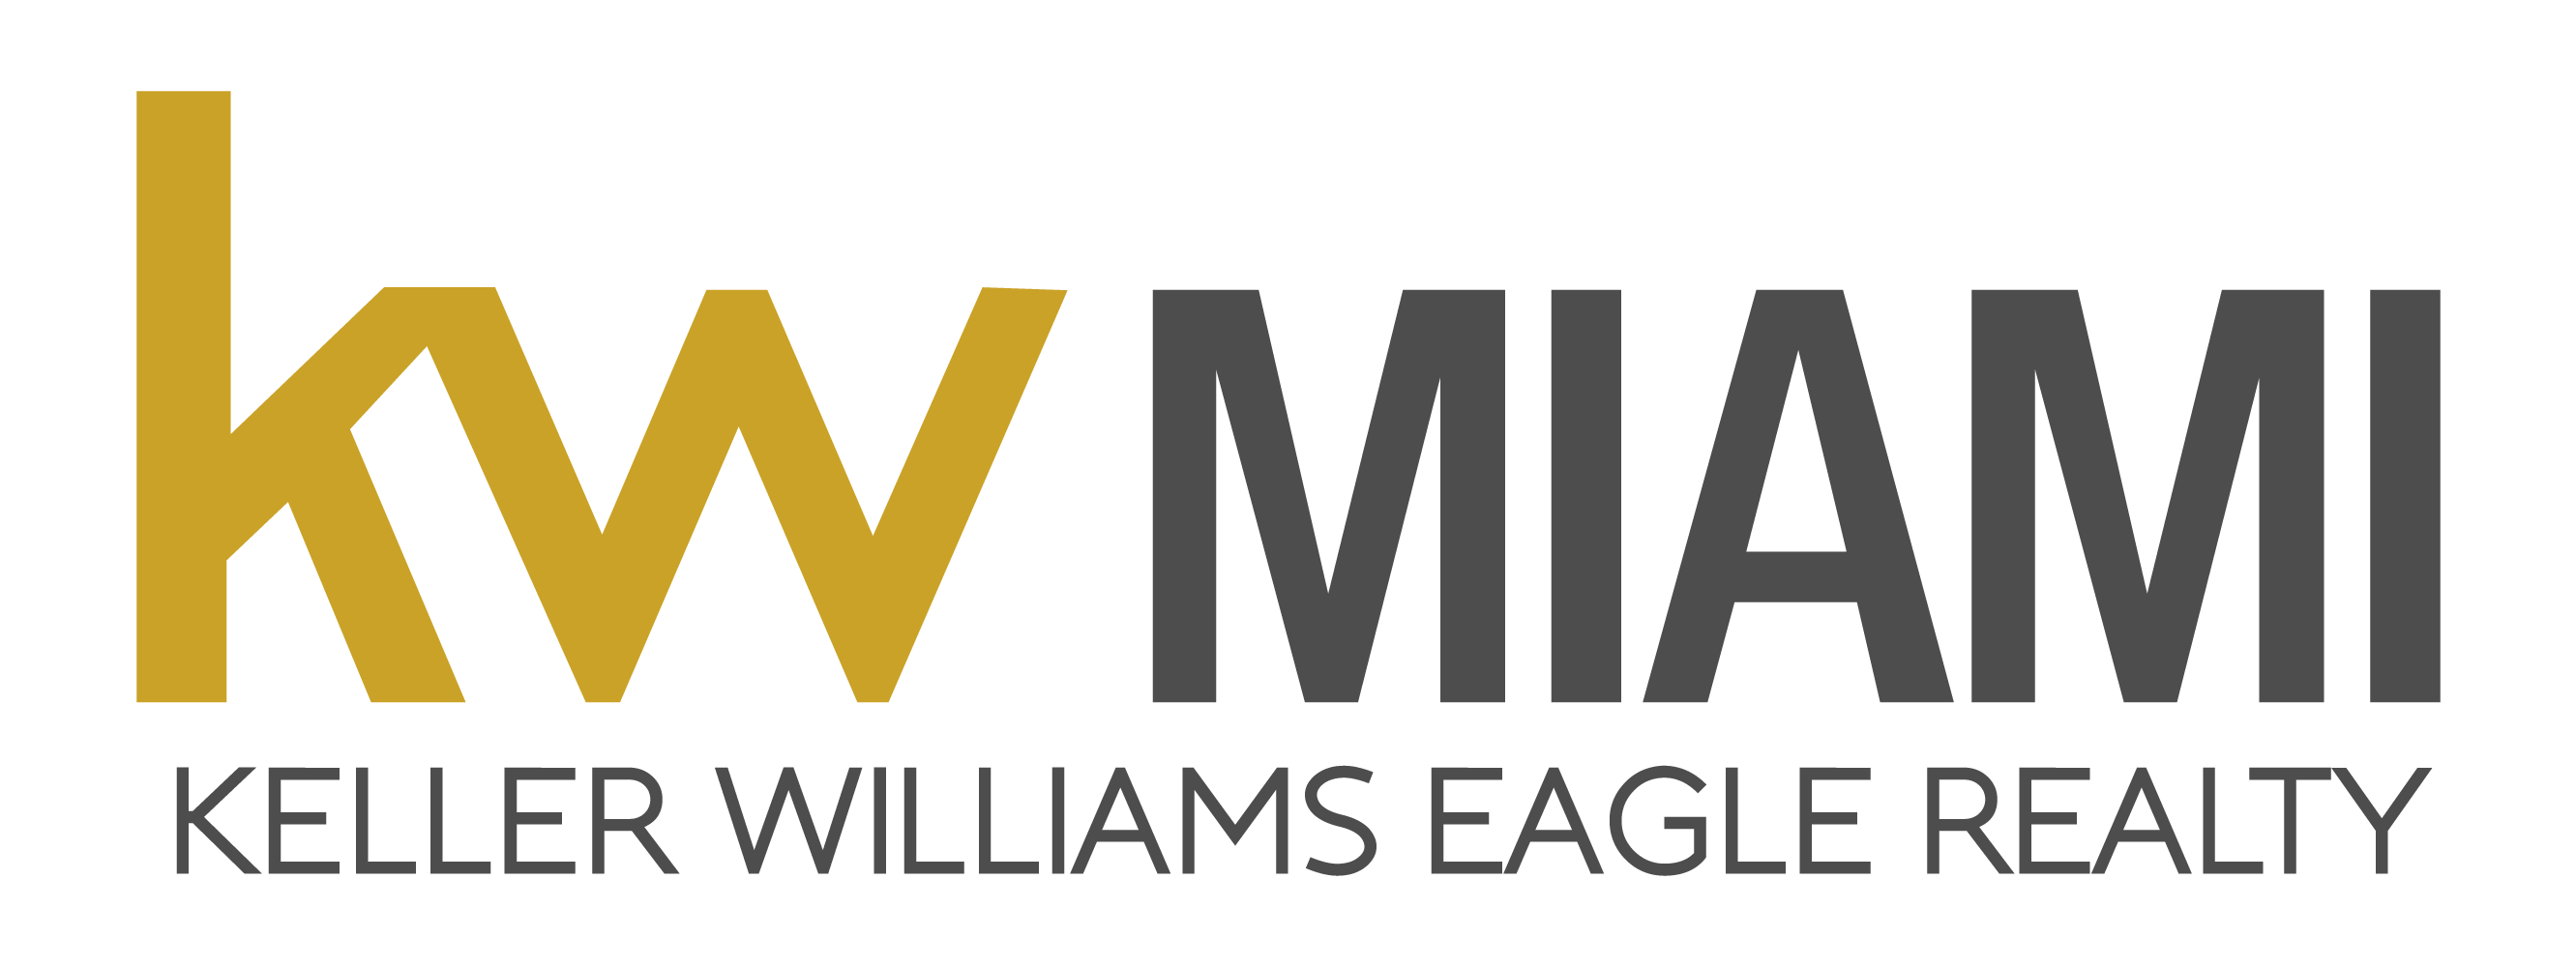 Keller Williams Miami Logo